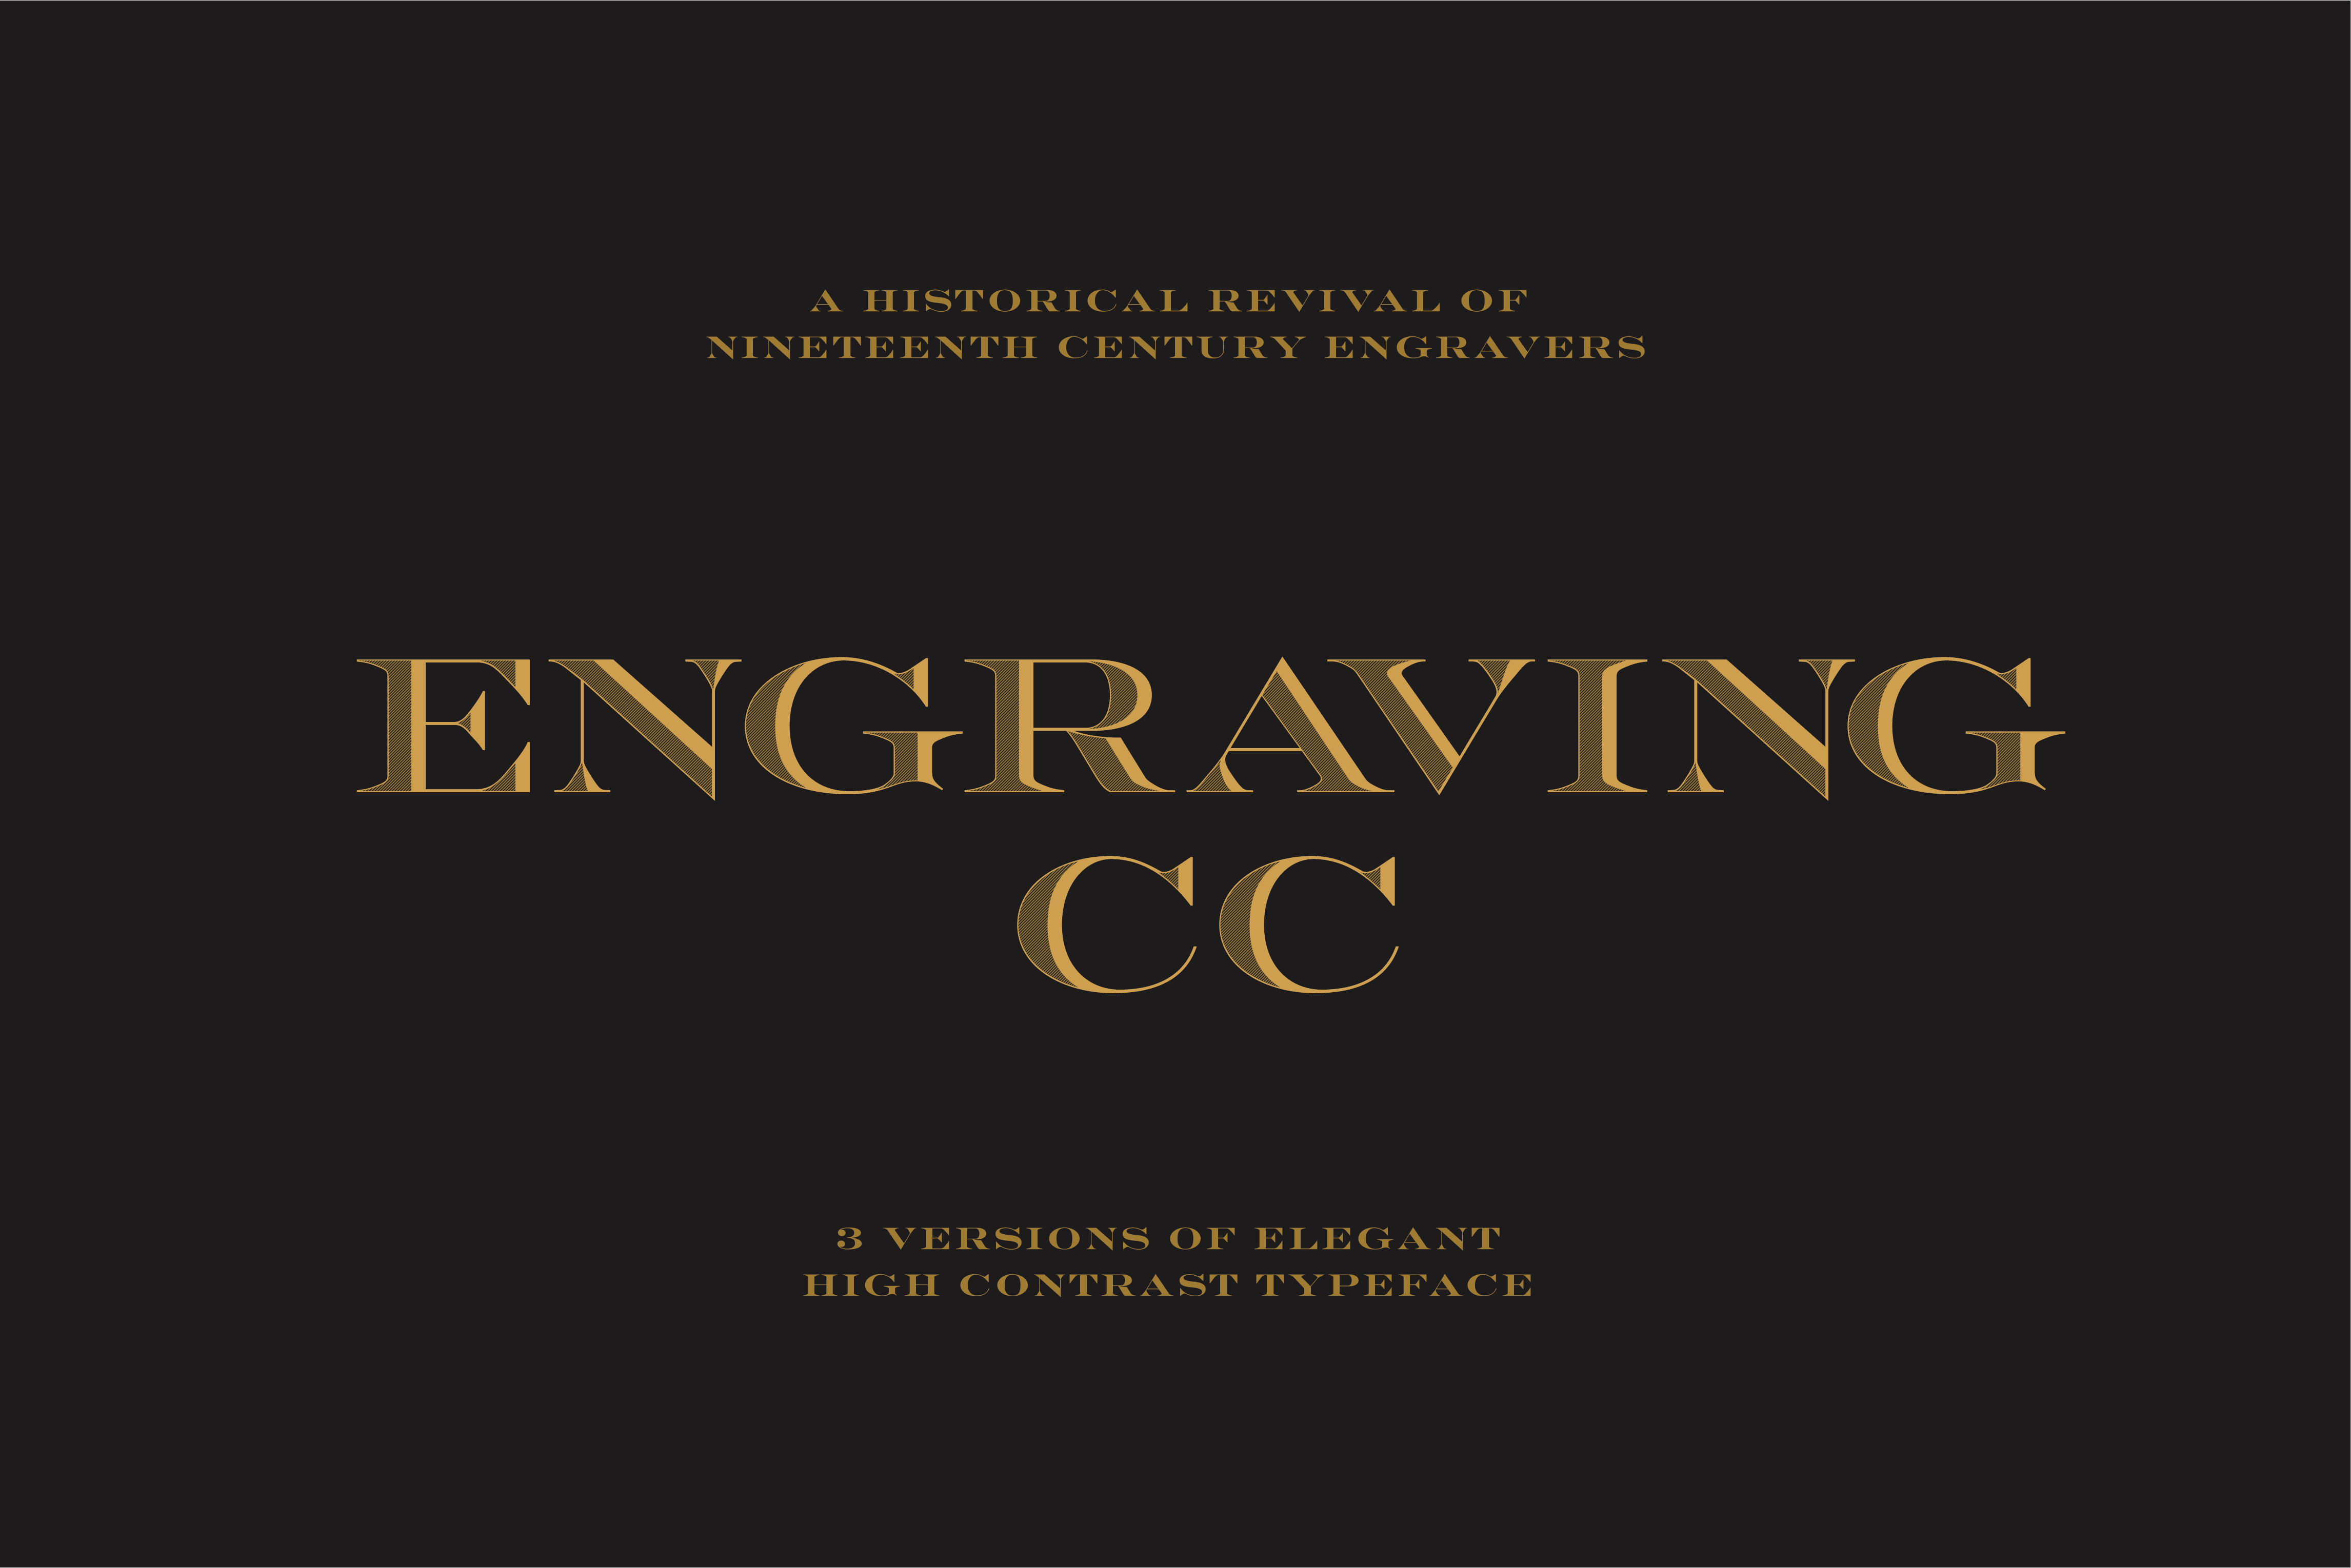 Engraving CC